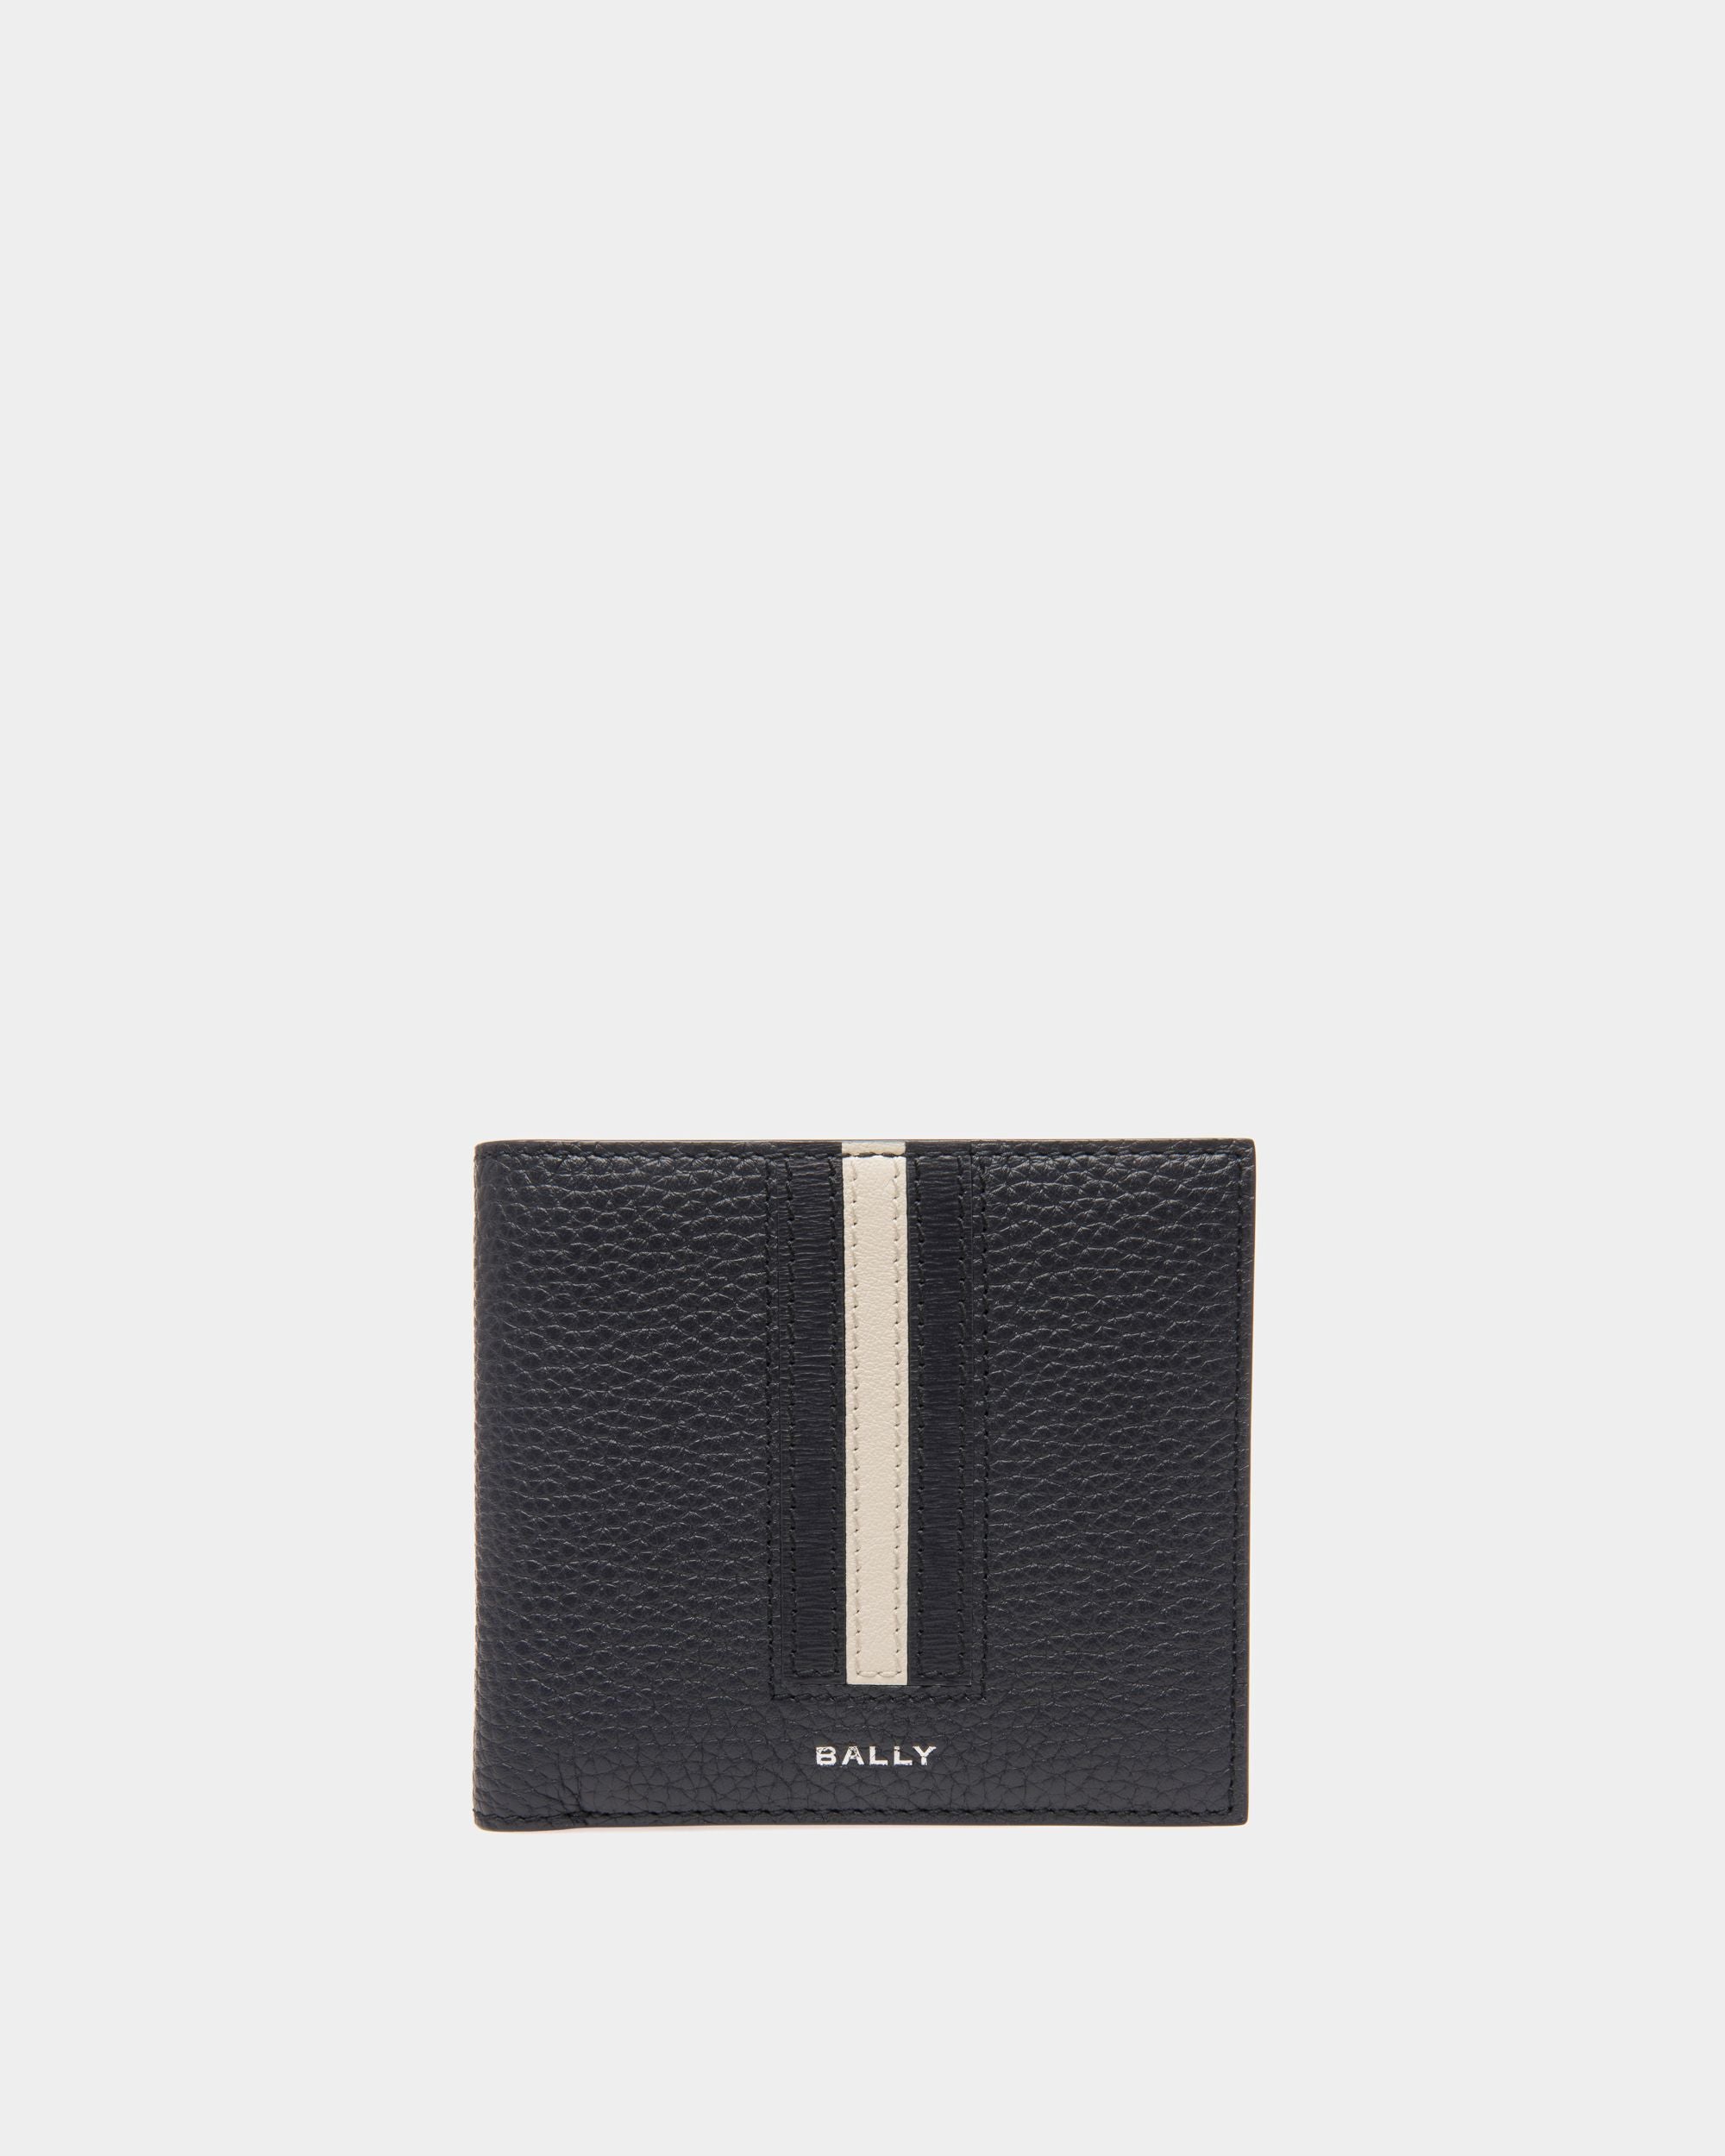 Men's Ribbon Wallet In Midnight Leather | Bally | Still Life Front